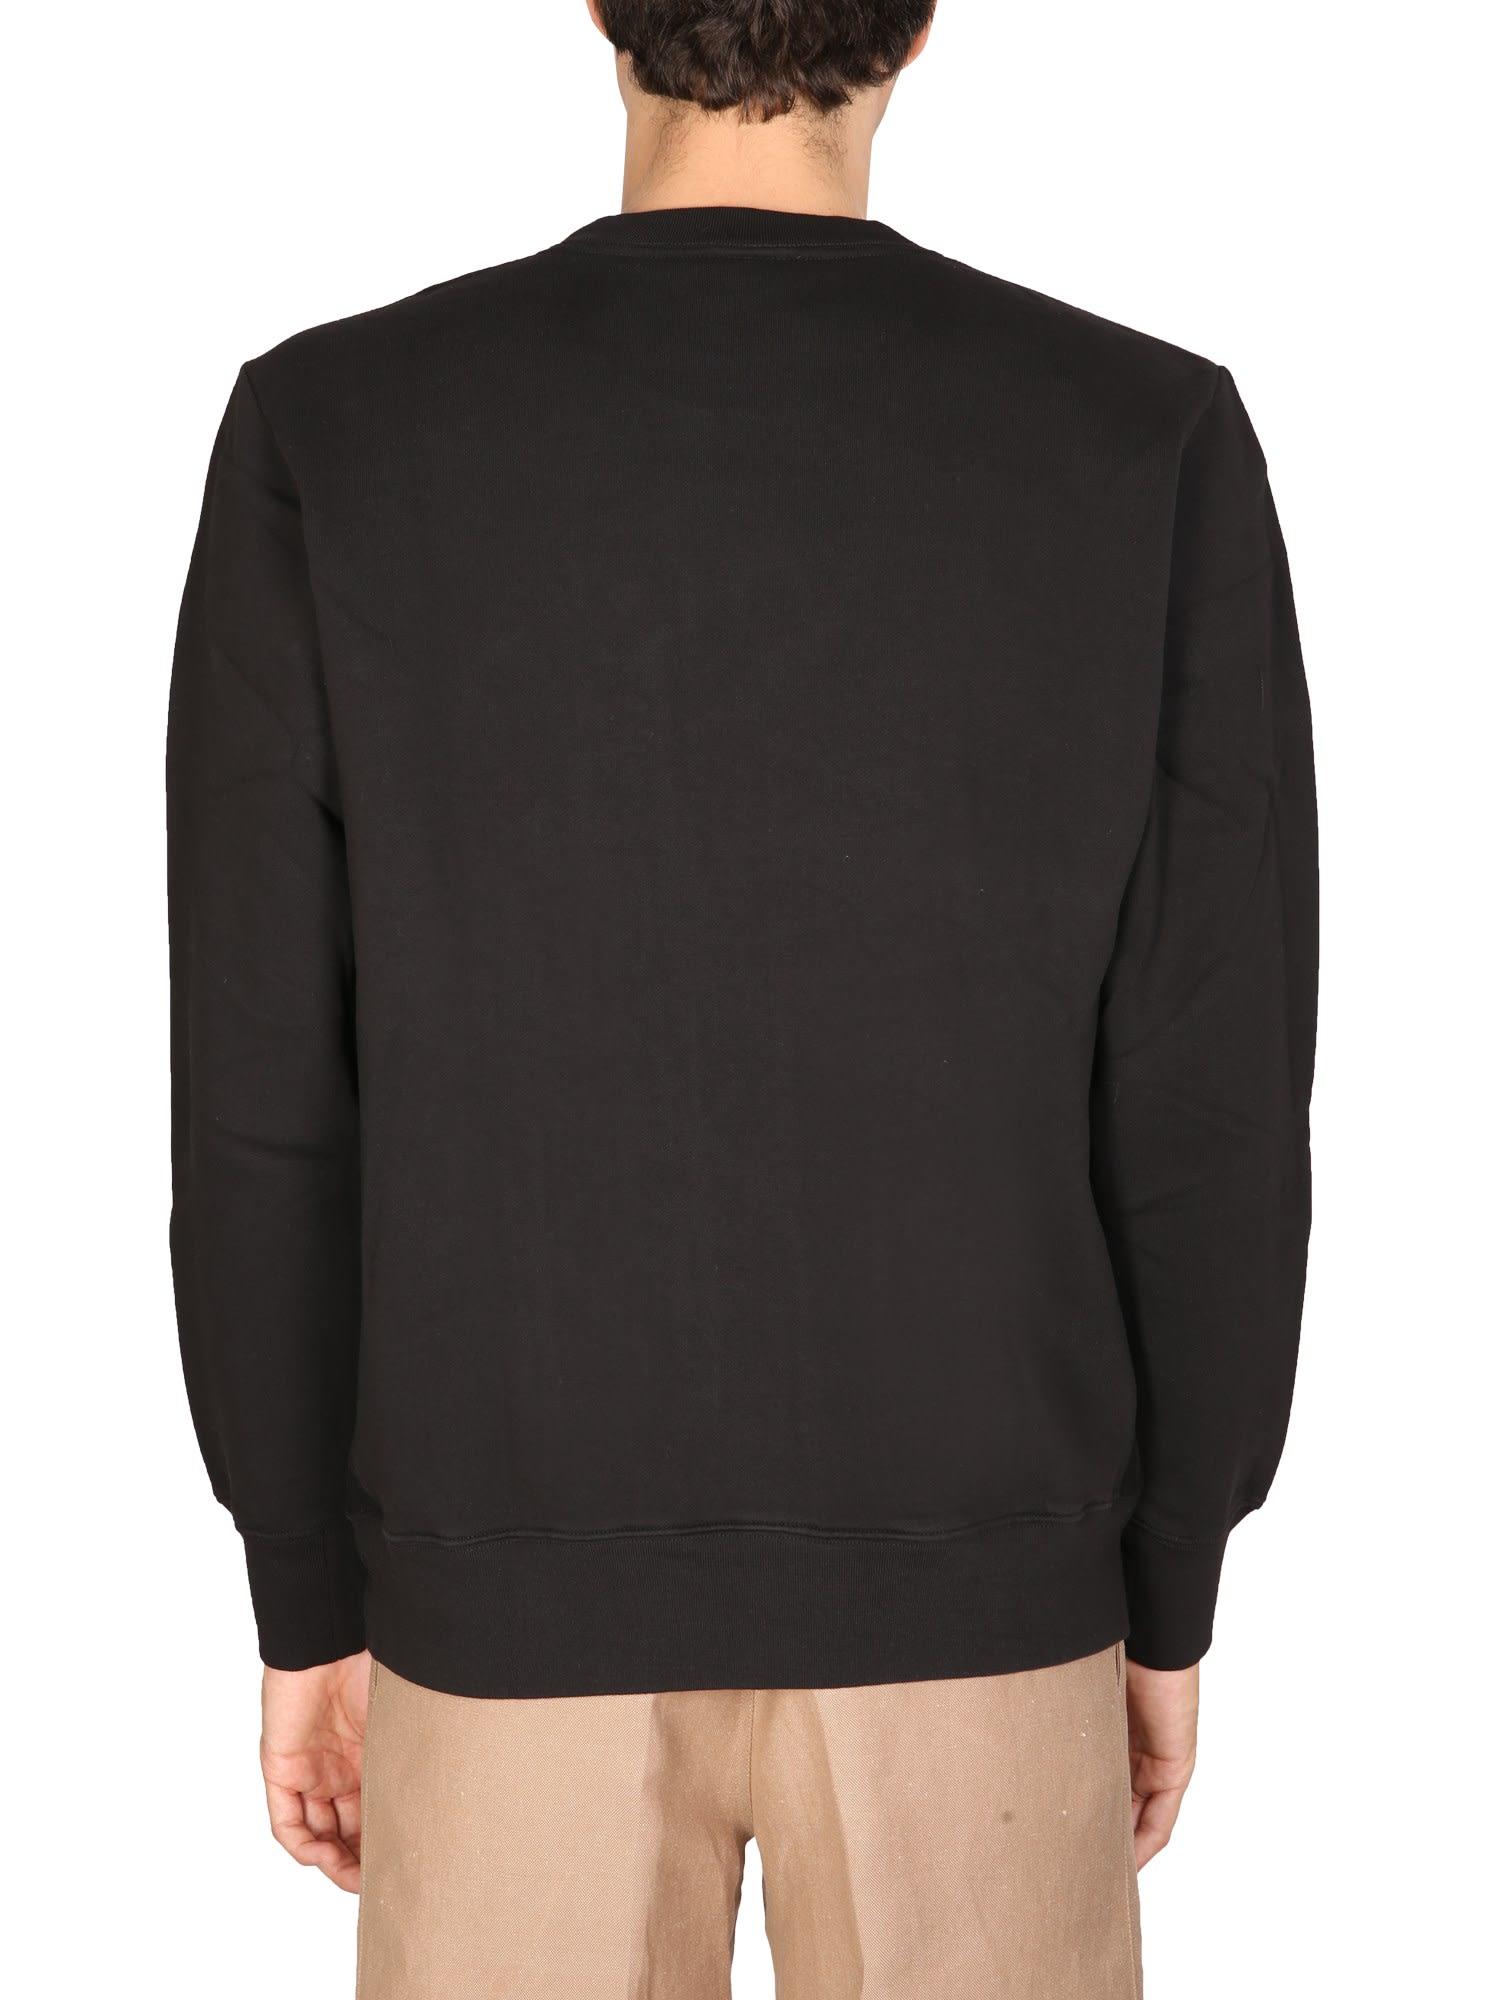 PS by Paul Smith "dino" Sweatshirt in Black for Men | Lyst